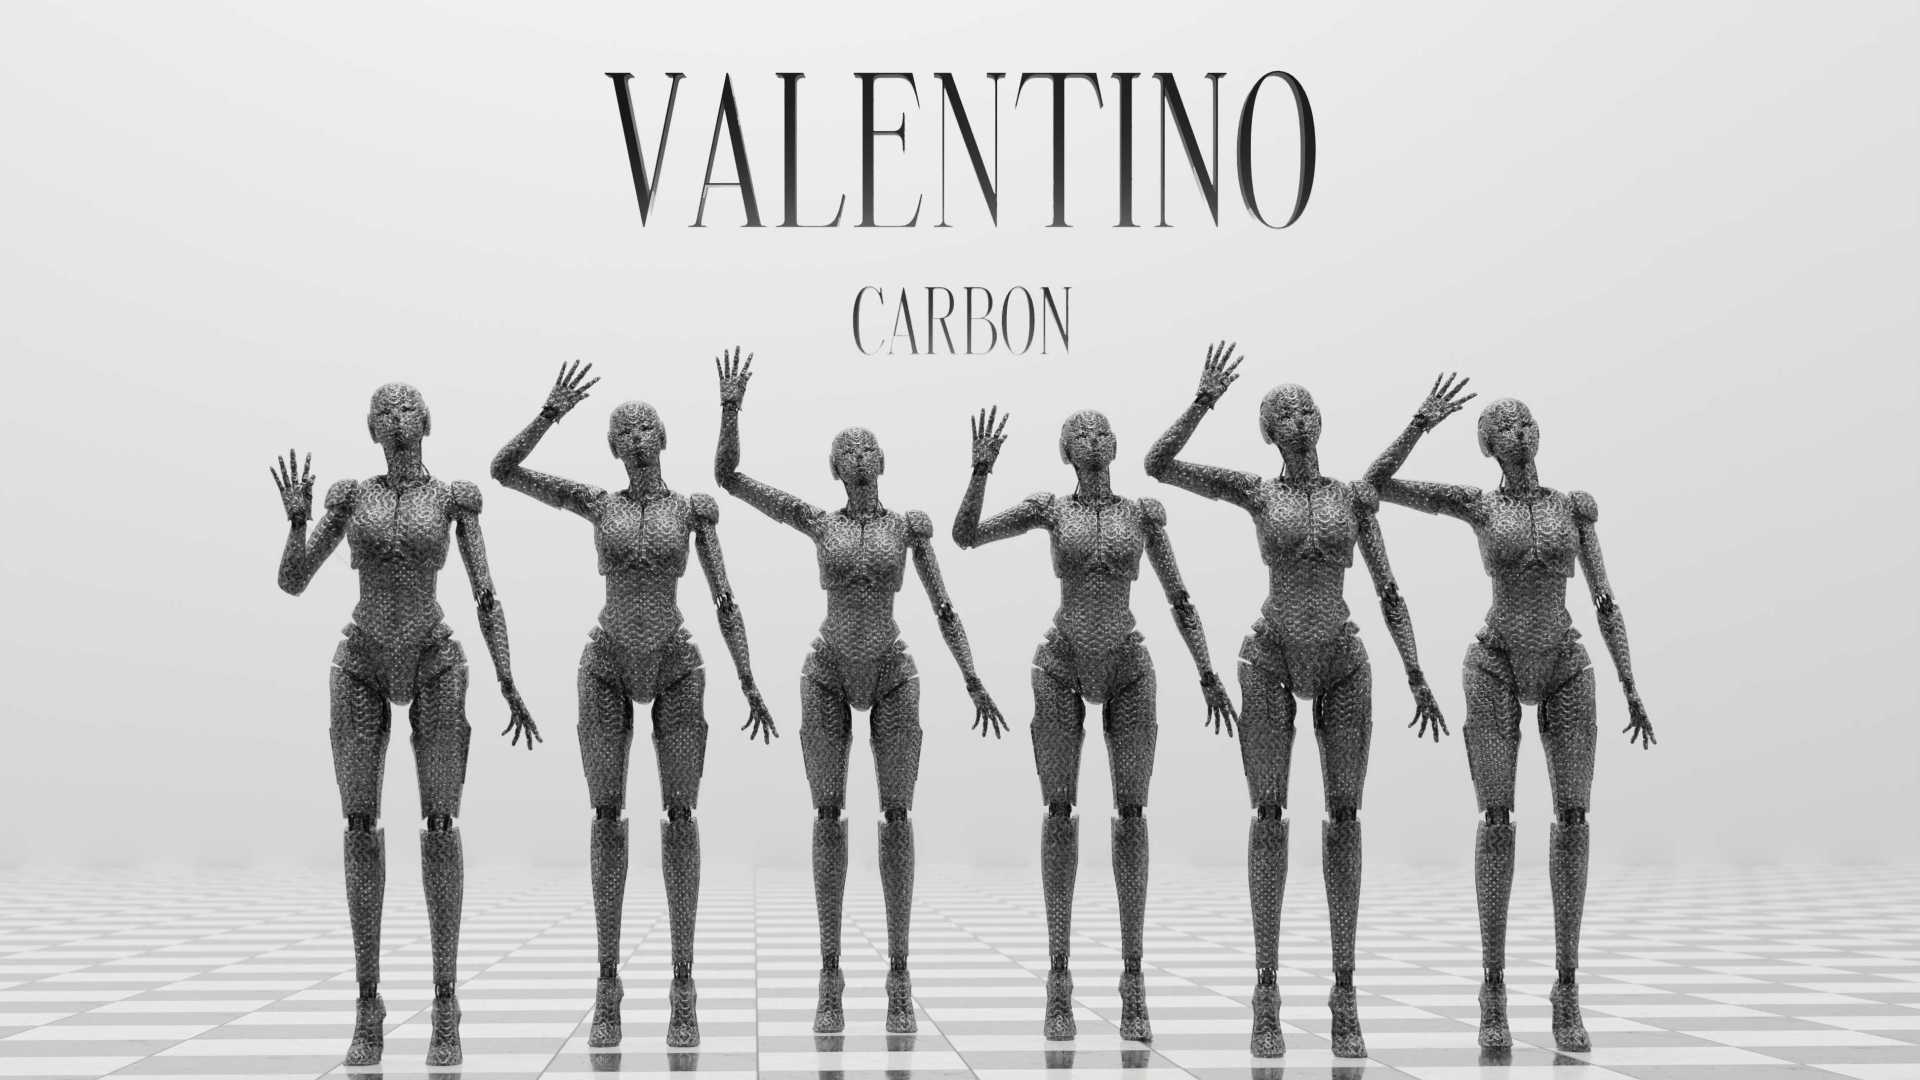 Valentino Carbon